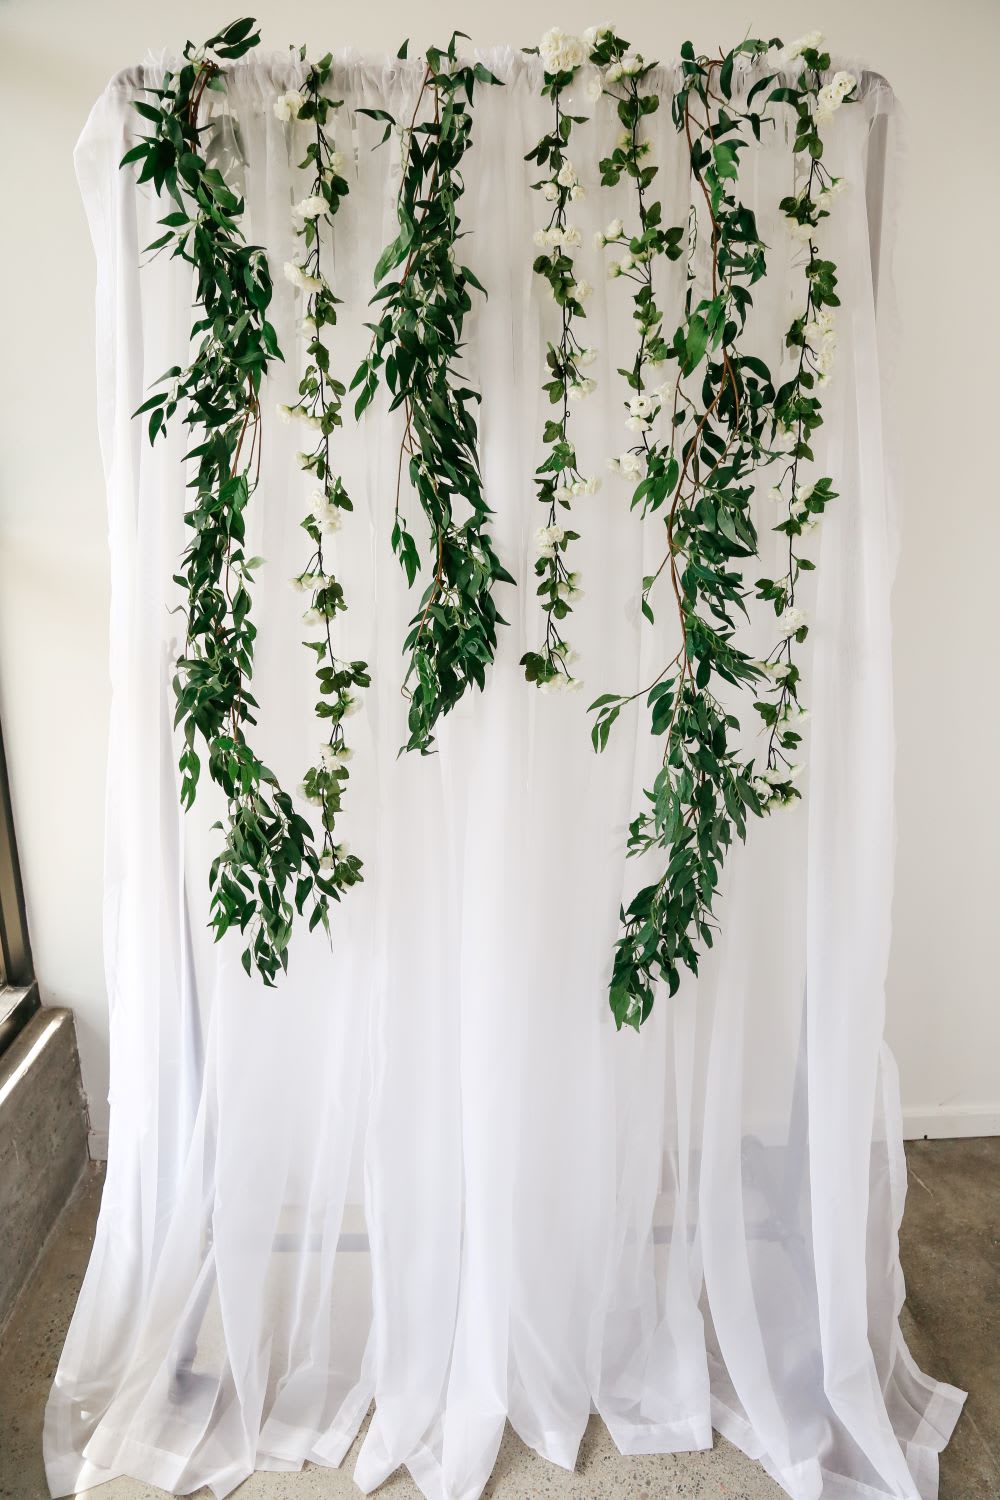 25 Next Level Bridal Shower Decorations To Make The Bride Feel Extra Special Lulus Com Fashion Blog